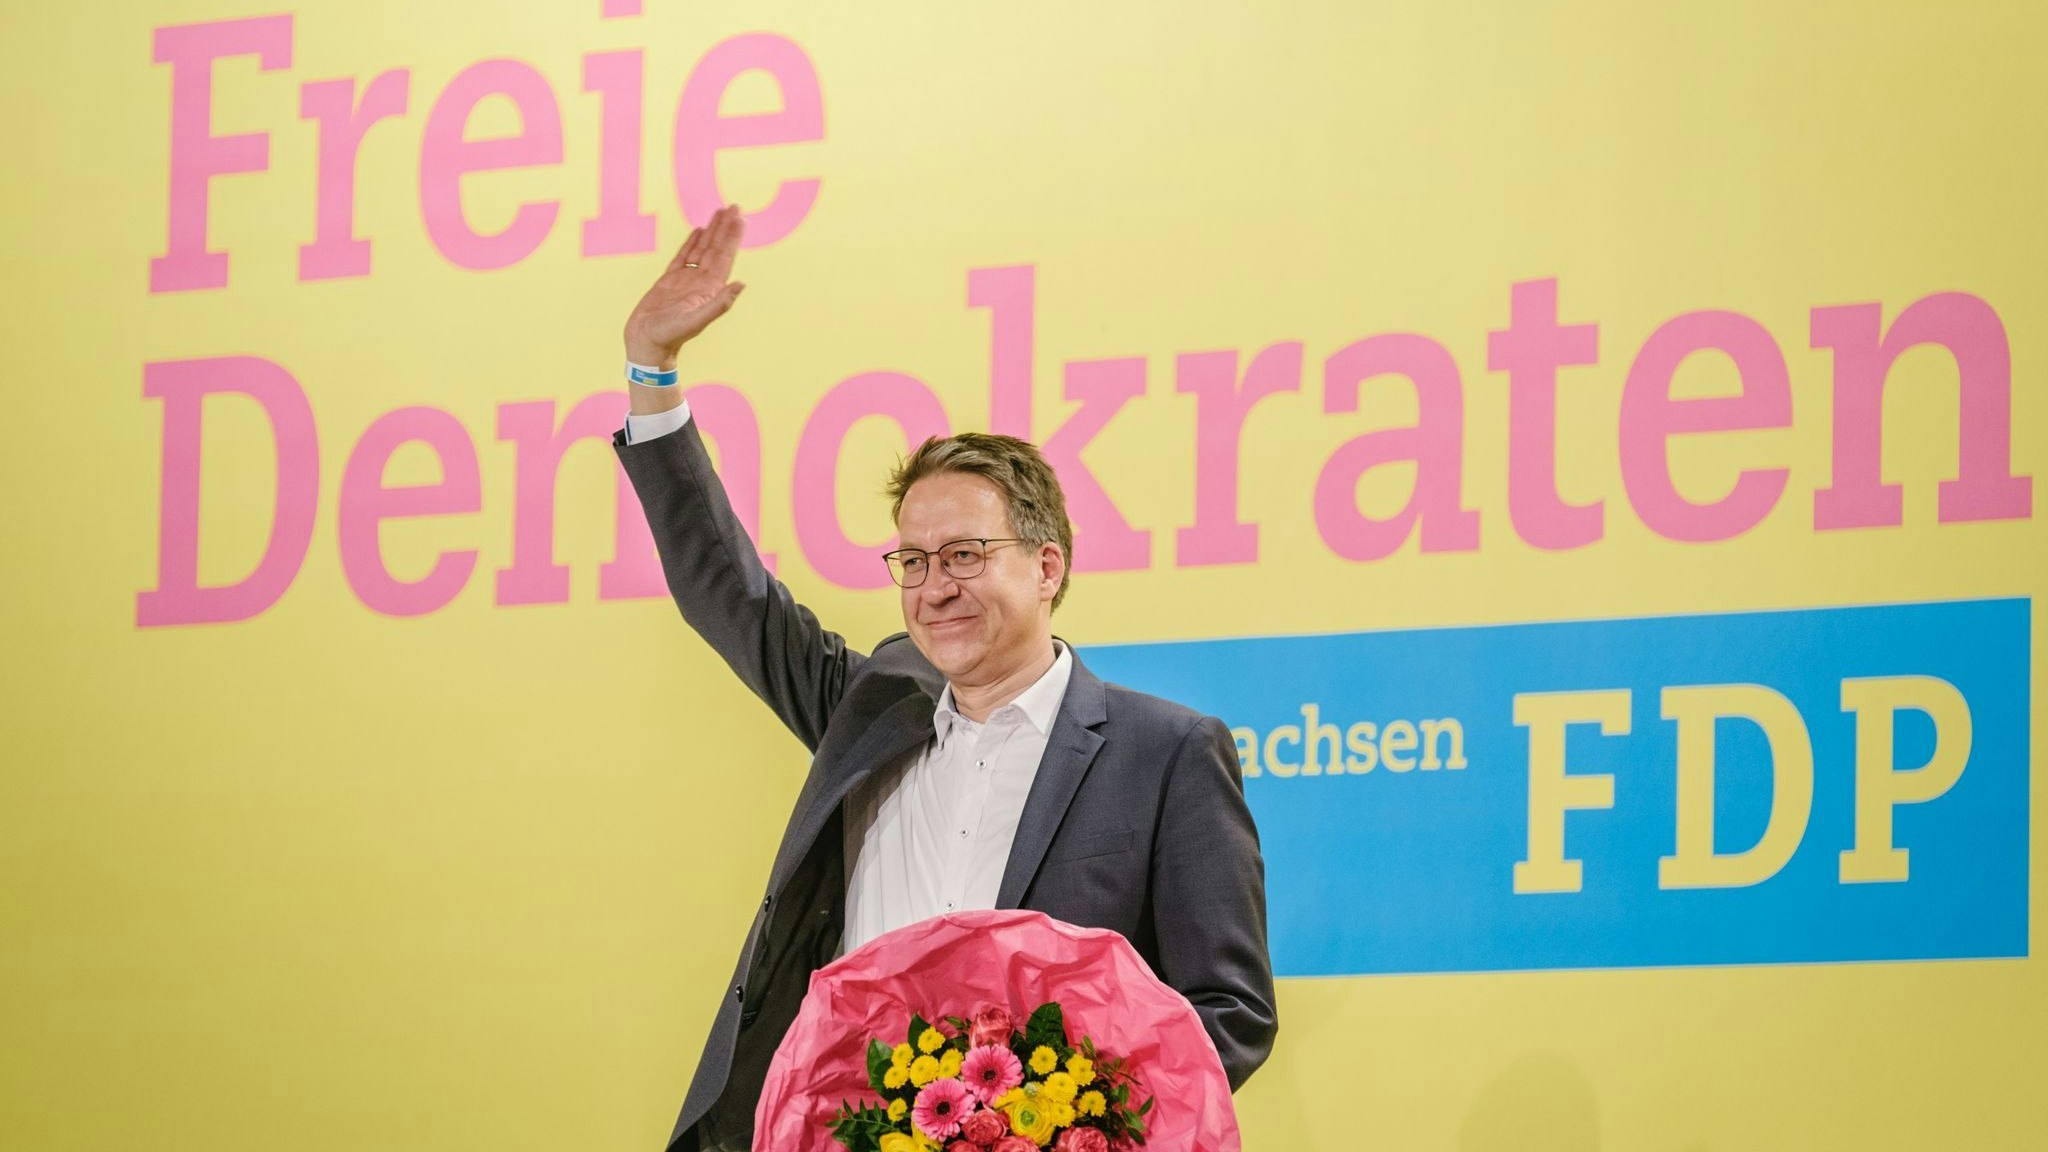 Führt die Liberalen in den Landtagswahlkampf: Stefan Birkner (FDP). Foto: dpa/Sparta